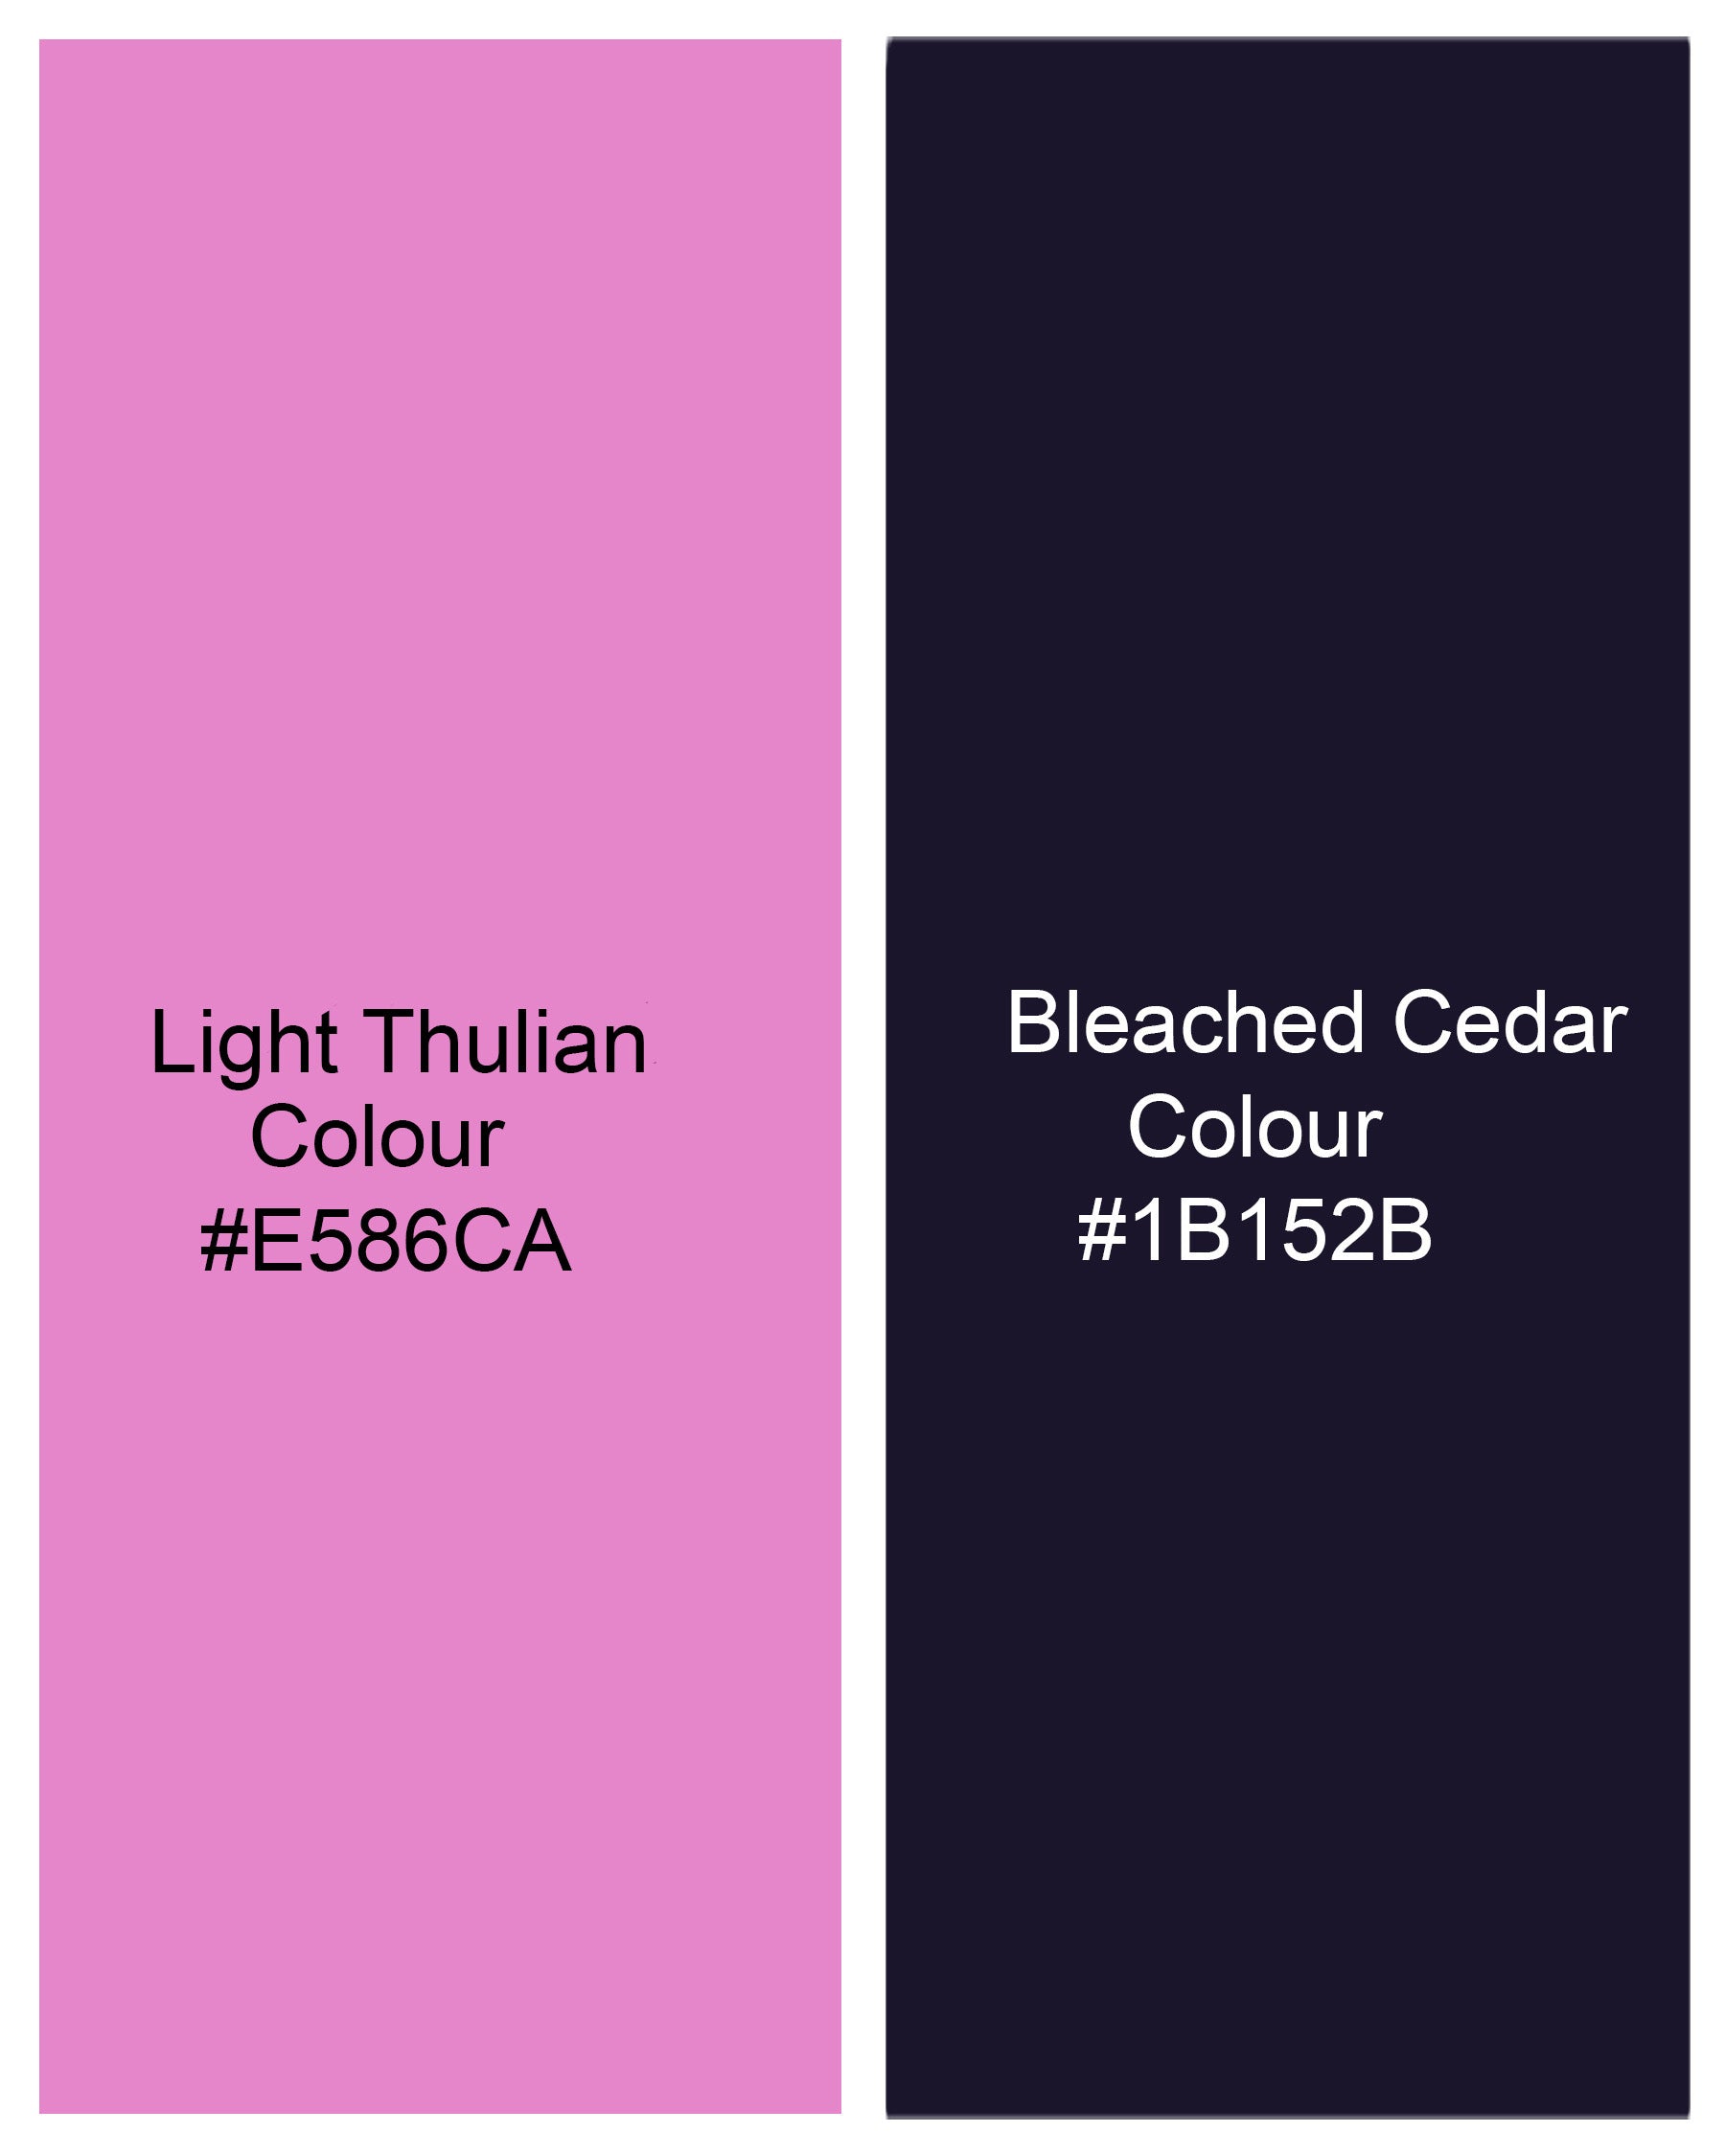 Light Thulian Pink with Bleached Cedar Blue Checked Royal Oxford Shirt 8134-38, 8134-H-38, 8134-39, 8134-H-39, 8134-40, 8134-H-40, 8134-42, 8134-H-42, 8134-44, 8134-H-44, 8134-46, 8134-H-46, 8134-48, 8134-H-48, 8134-50, 8134-H-50, 8134-52, 8134-H-52